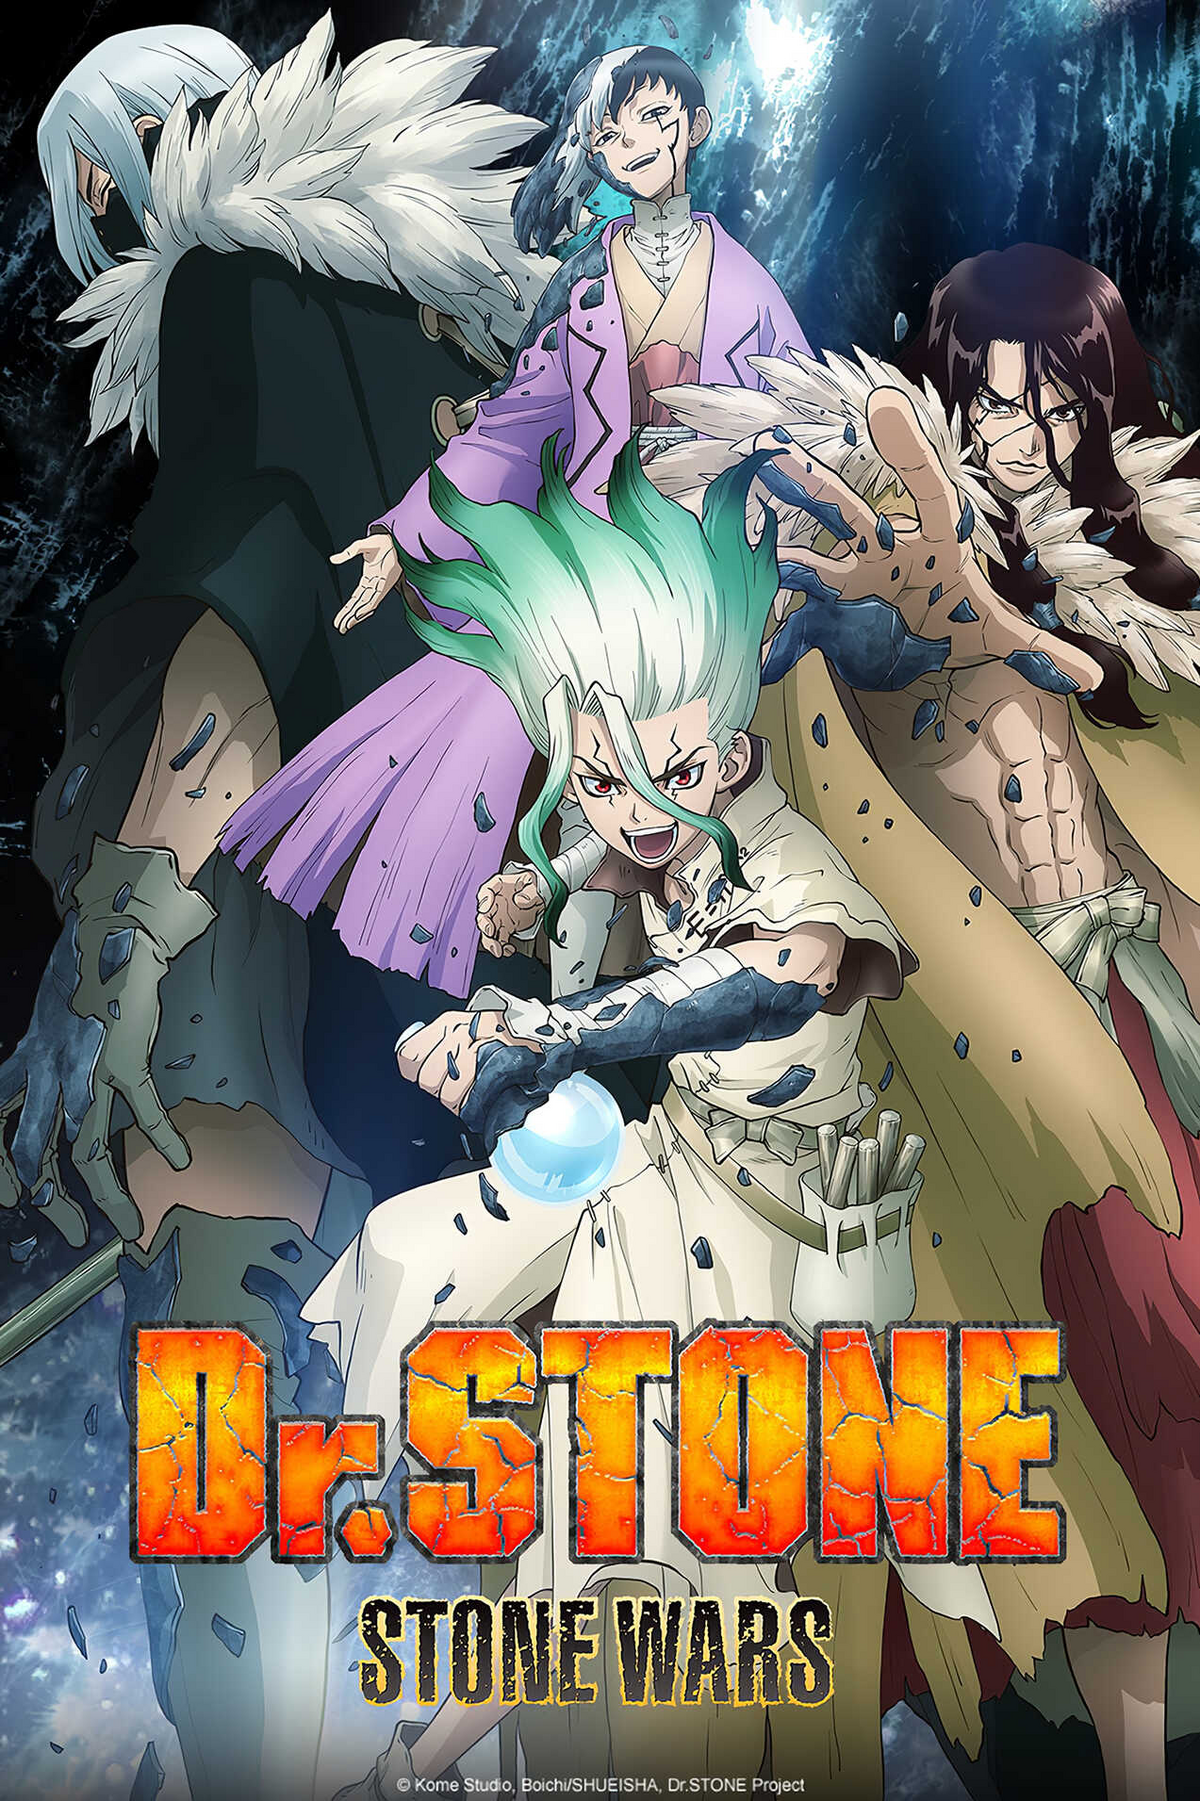 Dr Stone Manga Online